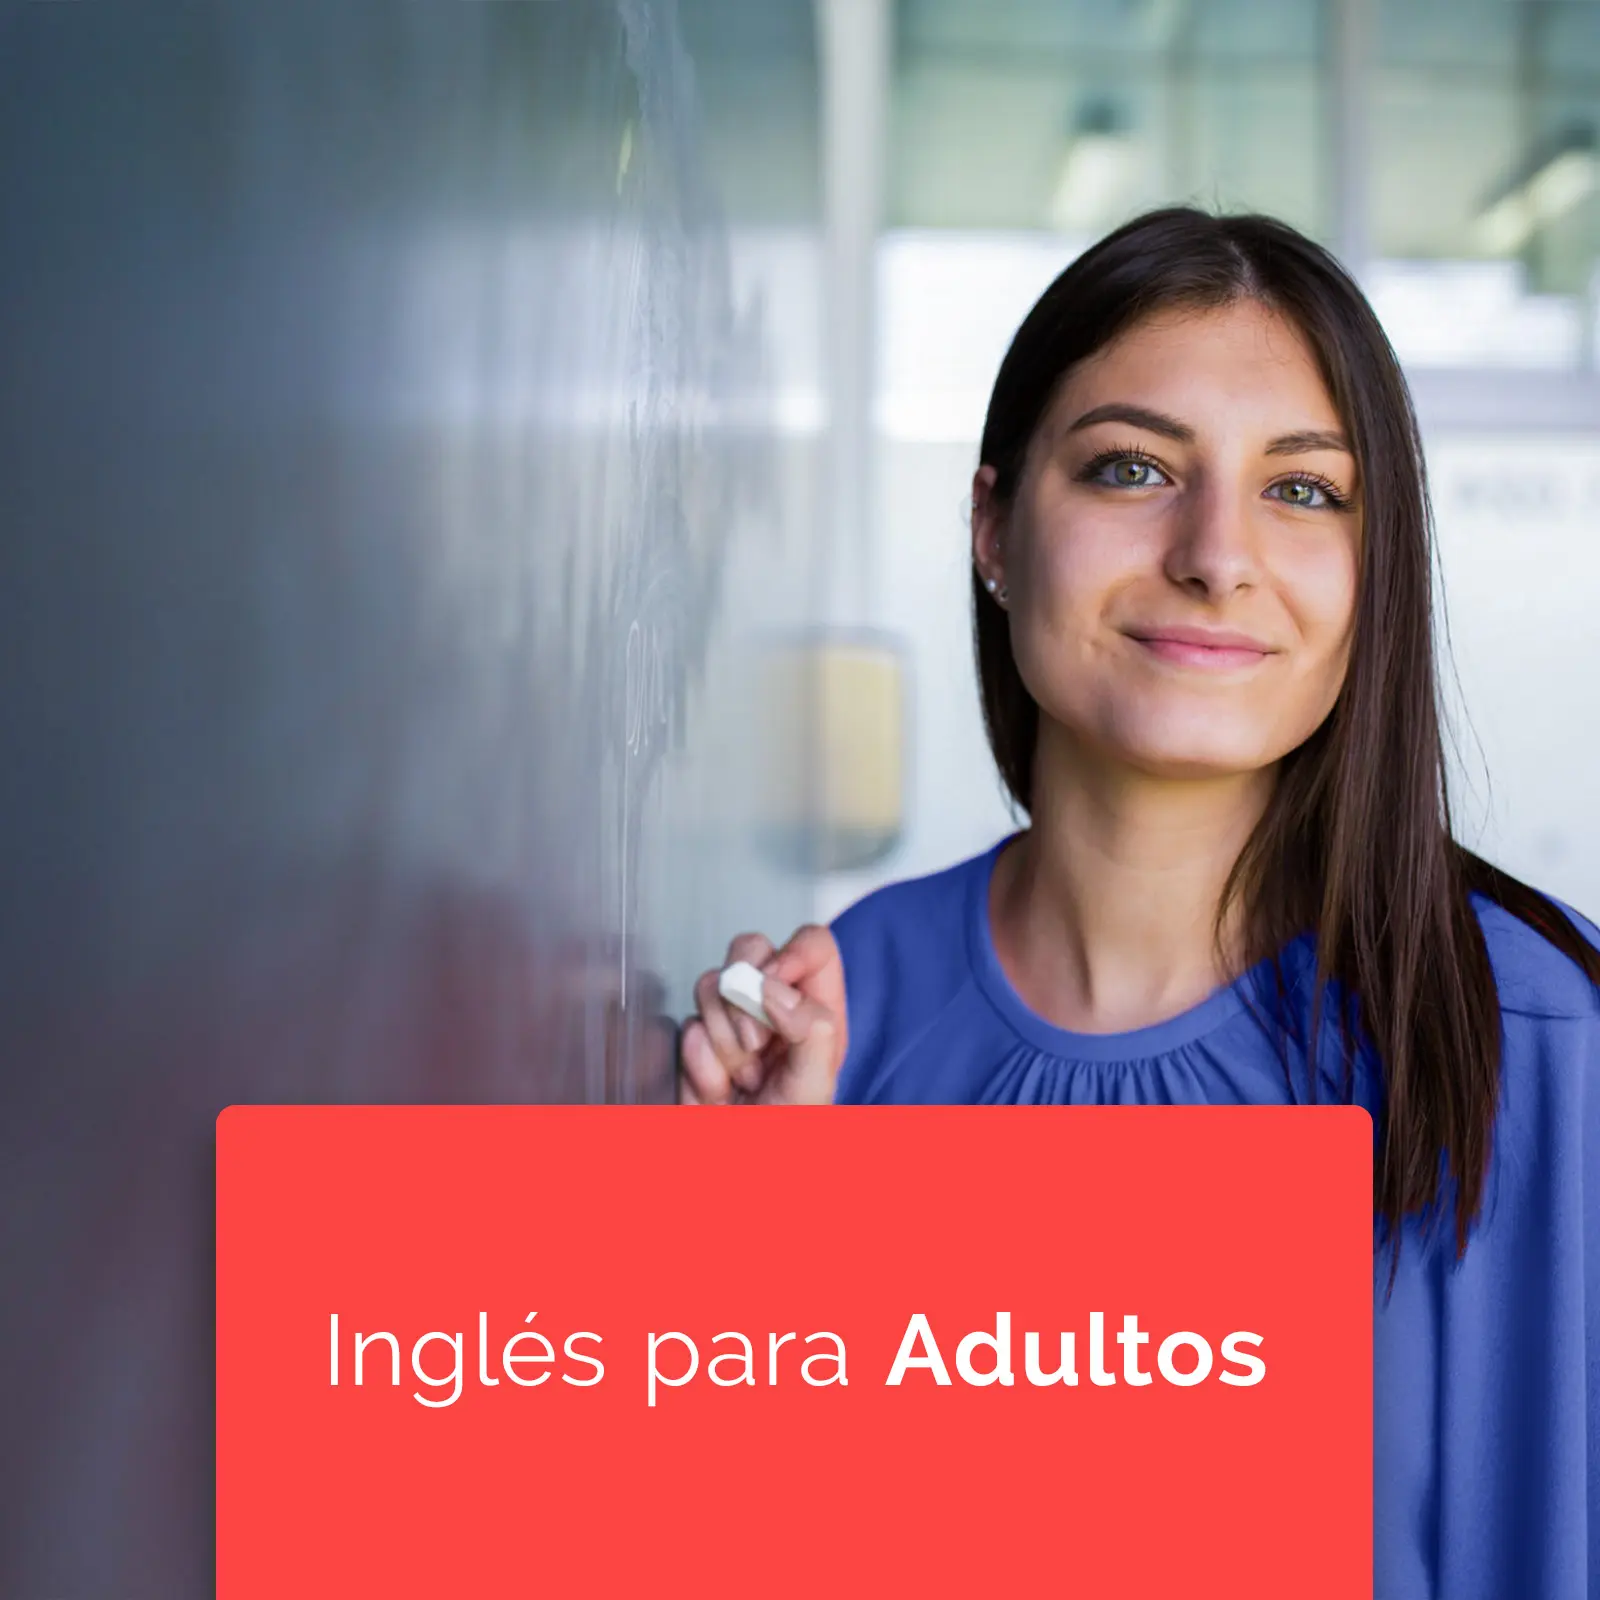 Cursos de inglés en Málaga para adultos.